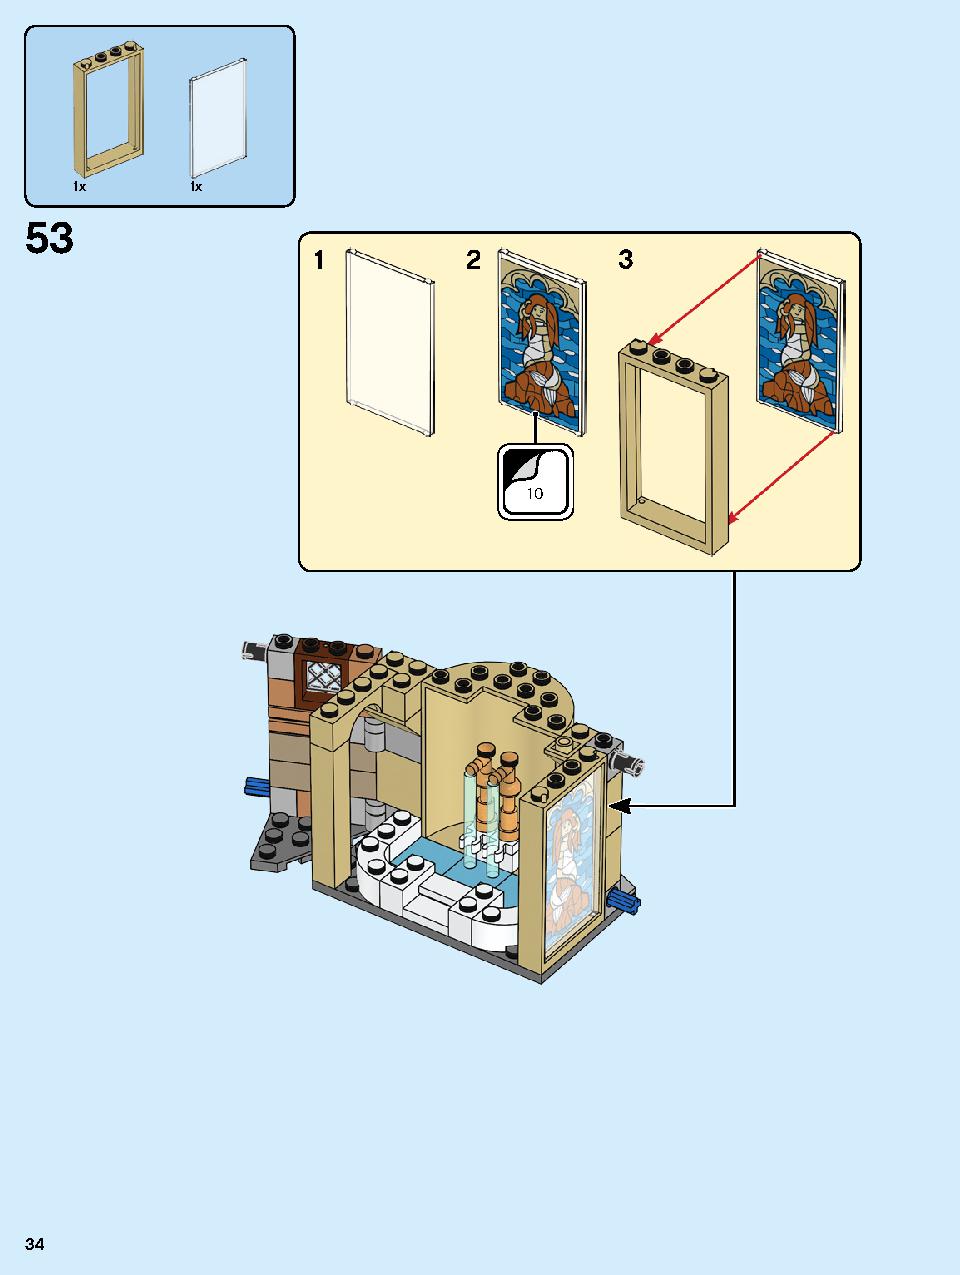 Hogwarts Clock Tower 75948 LEGO information LEGO instructions 34 page